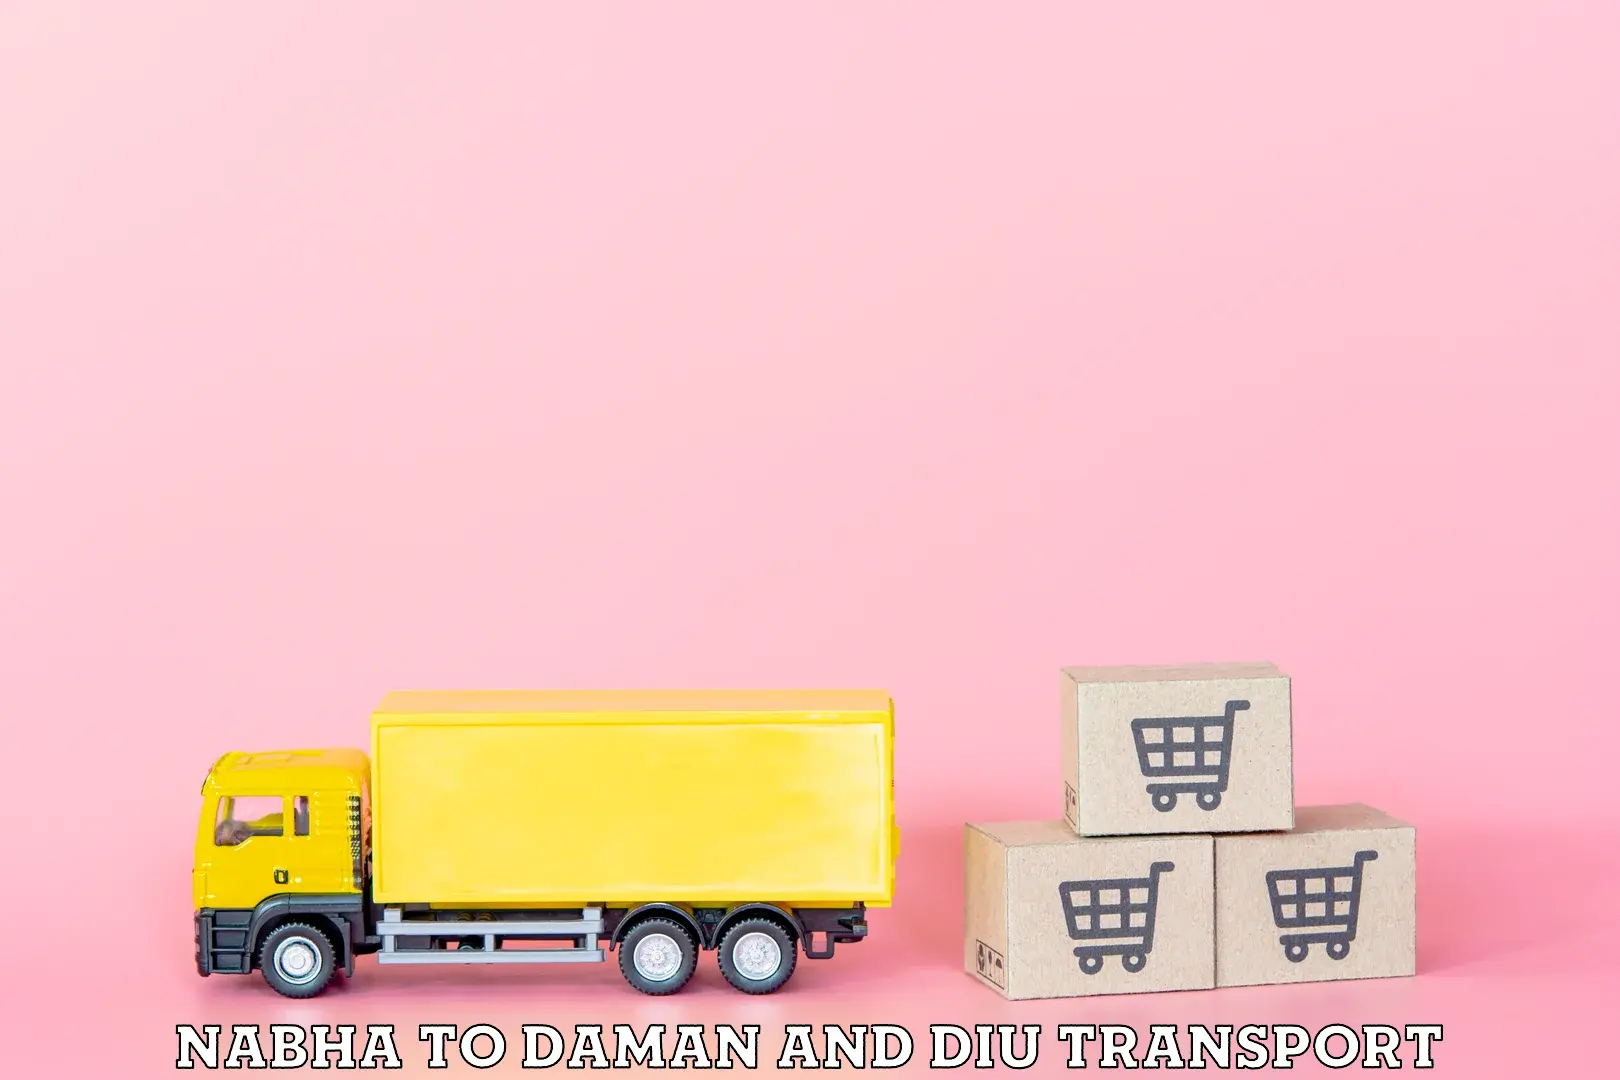 India truck logistics services Nabha to Diu